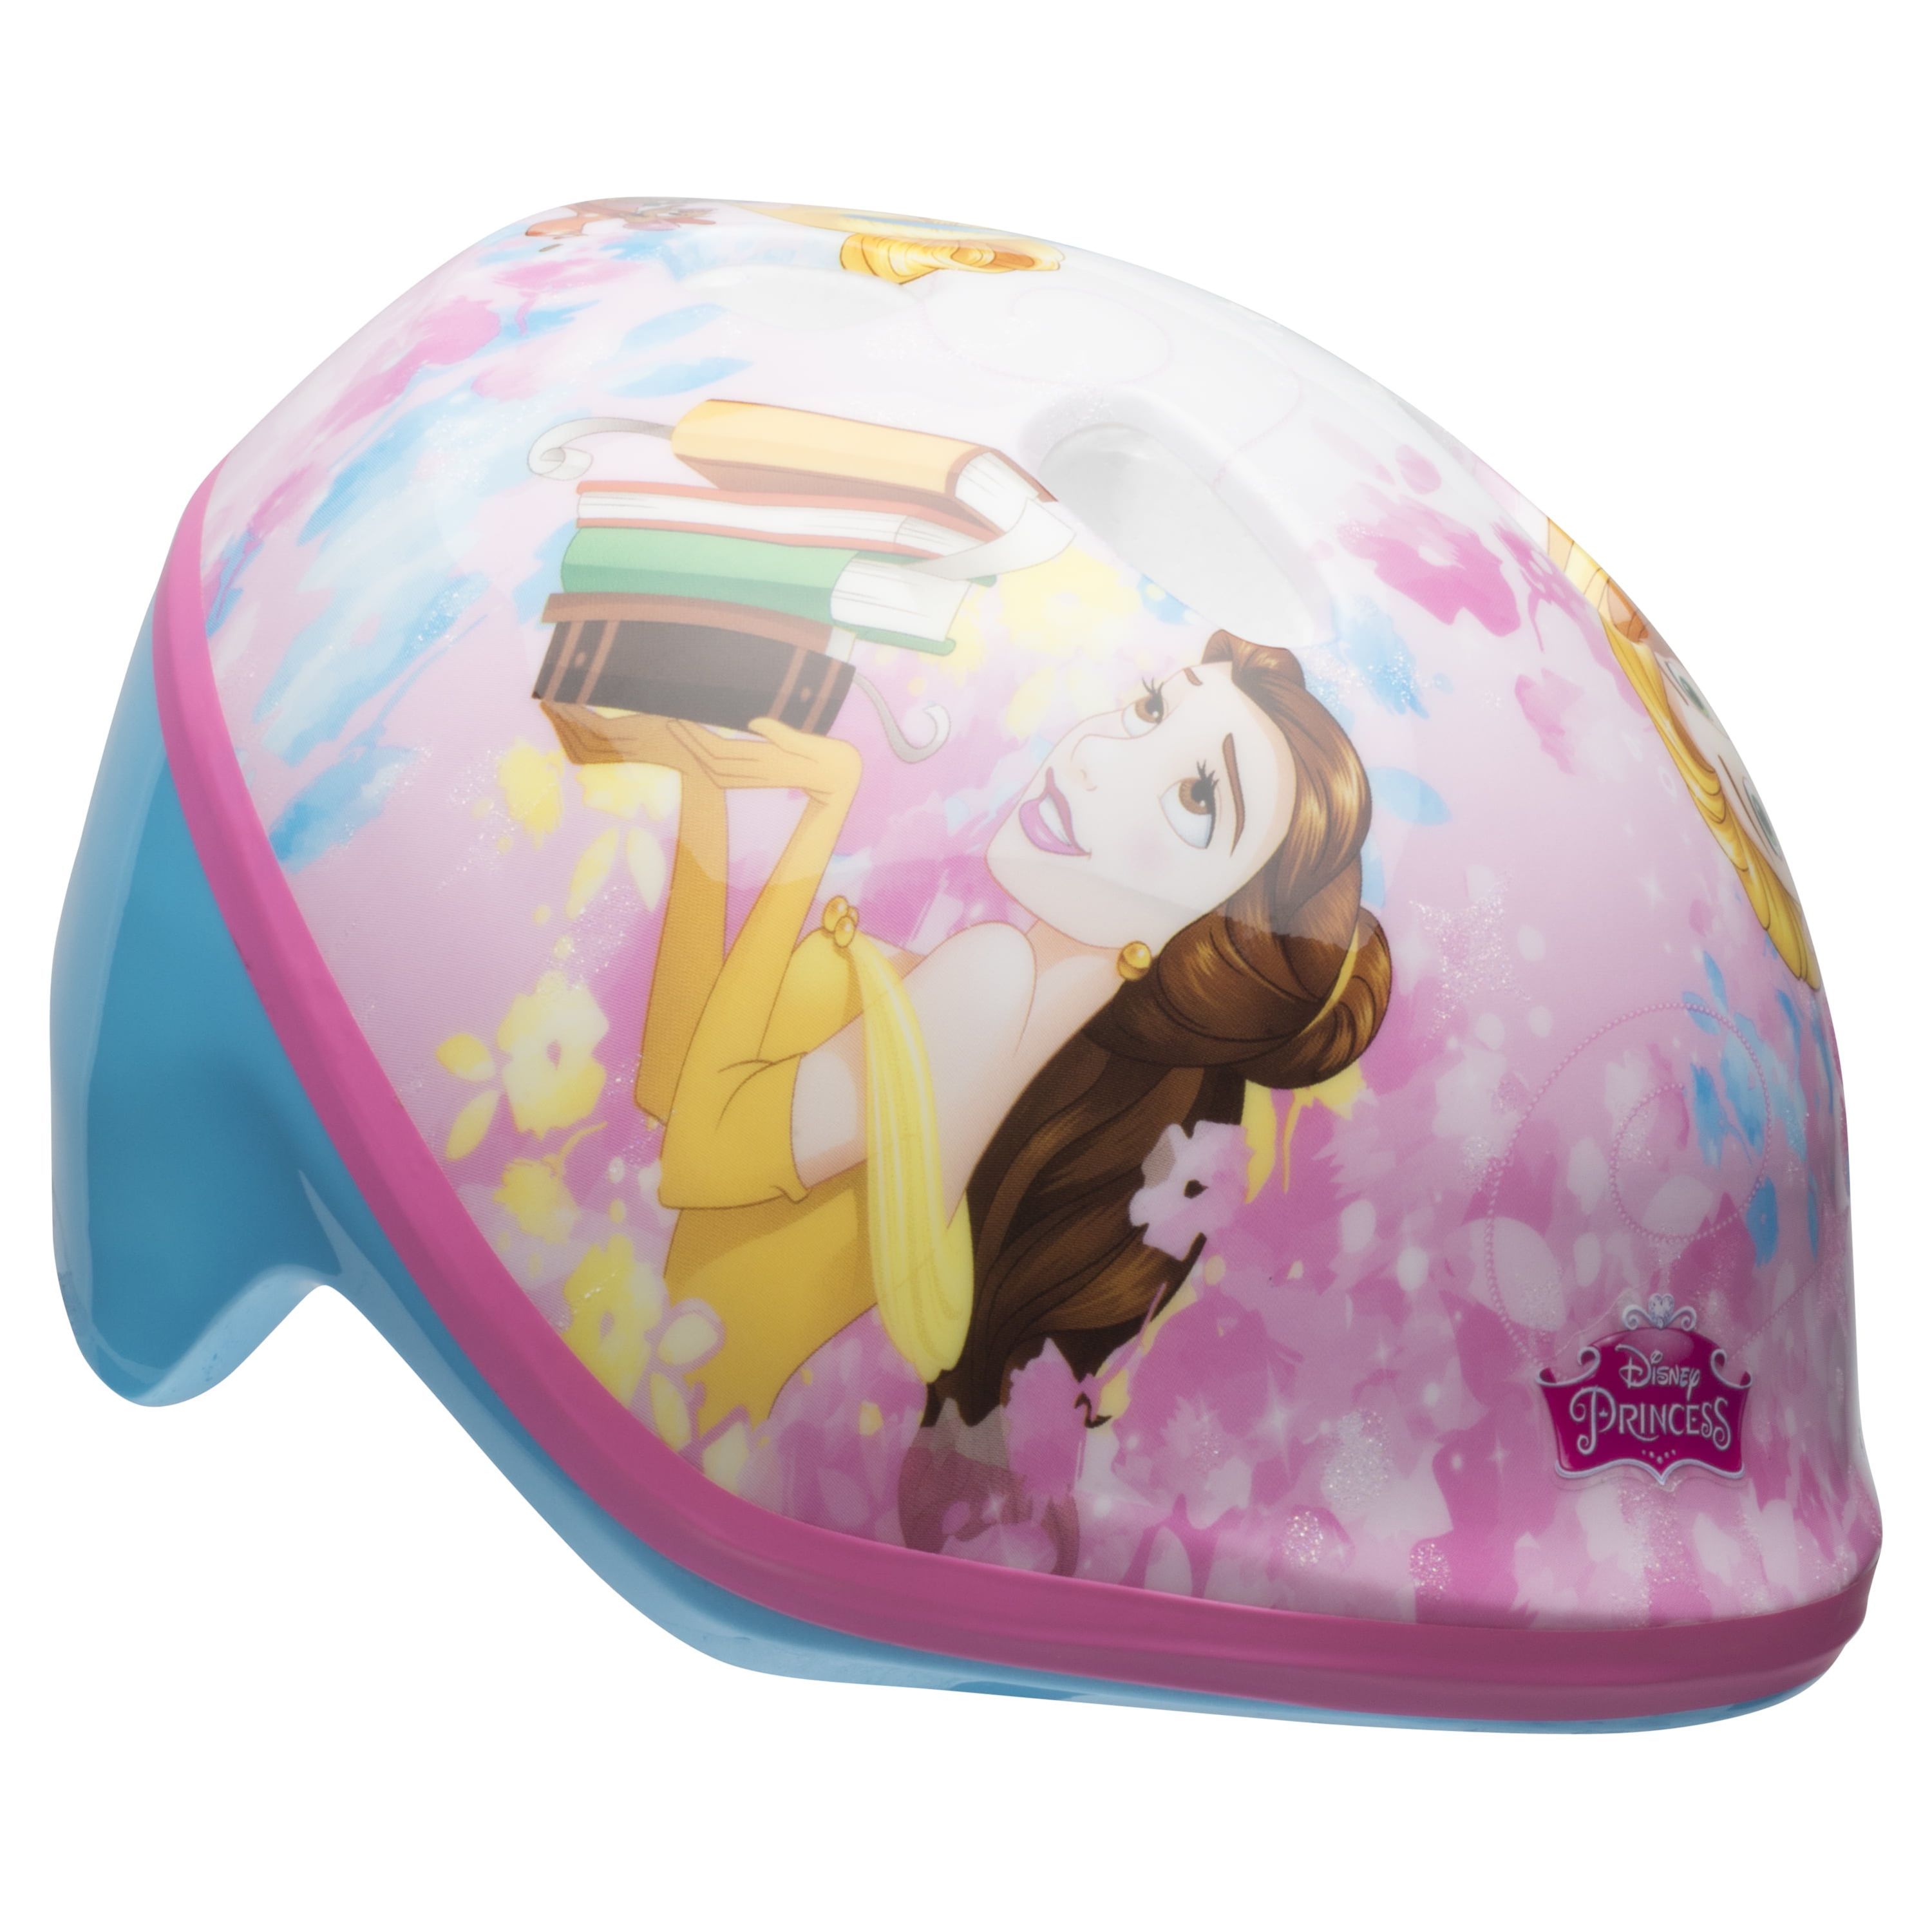 Disney Princesses Rule Glitter Bell Bike Helmet, Pink/Light Blue, Toddler 3+ (48-52cm) - image 1 of 8